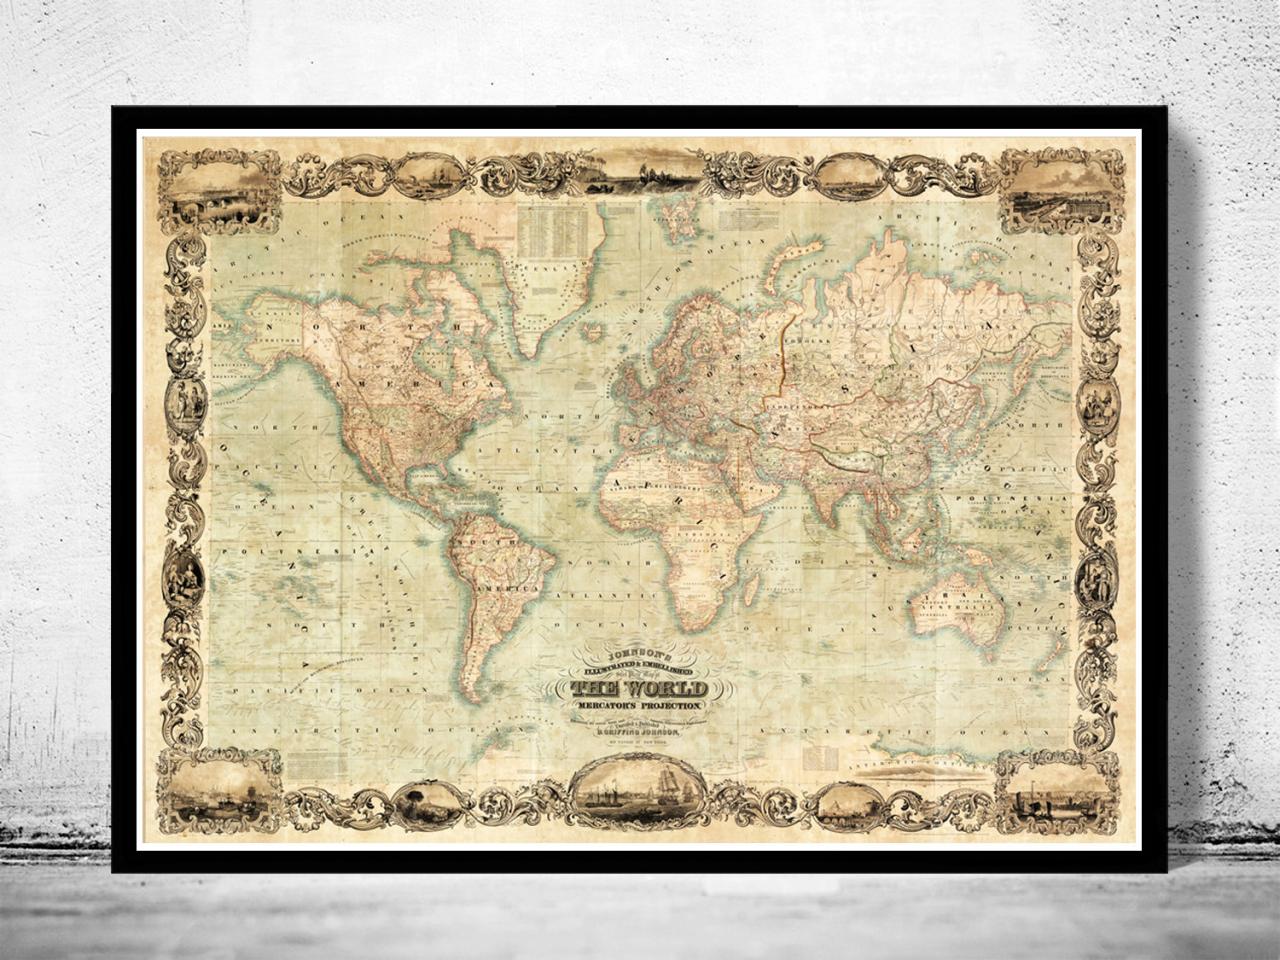 Wonderful Old World Map 1847 Mercator Projection